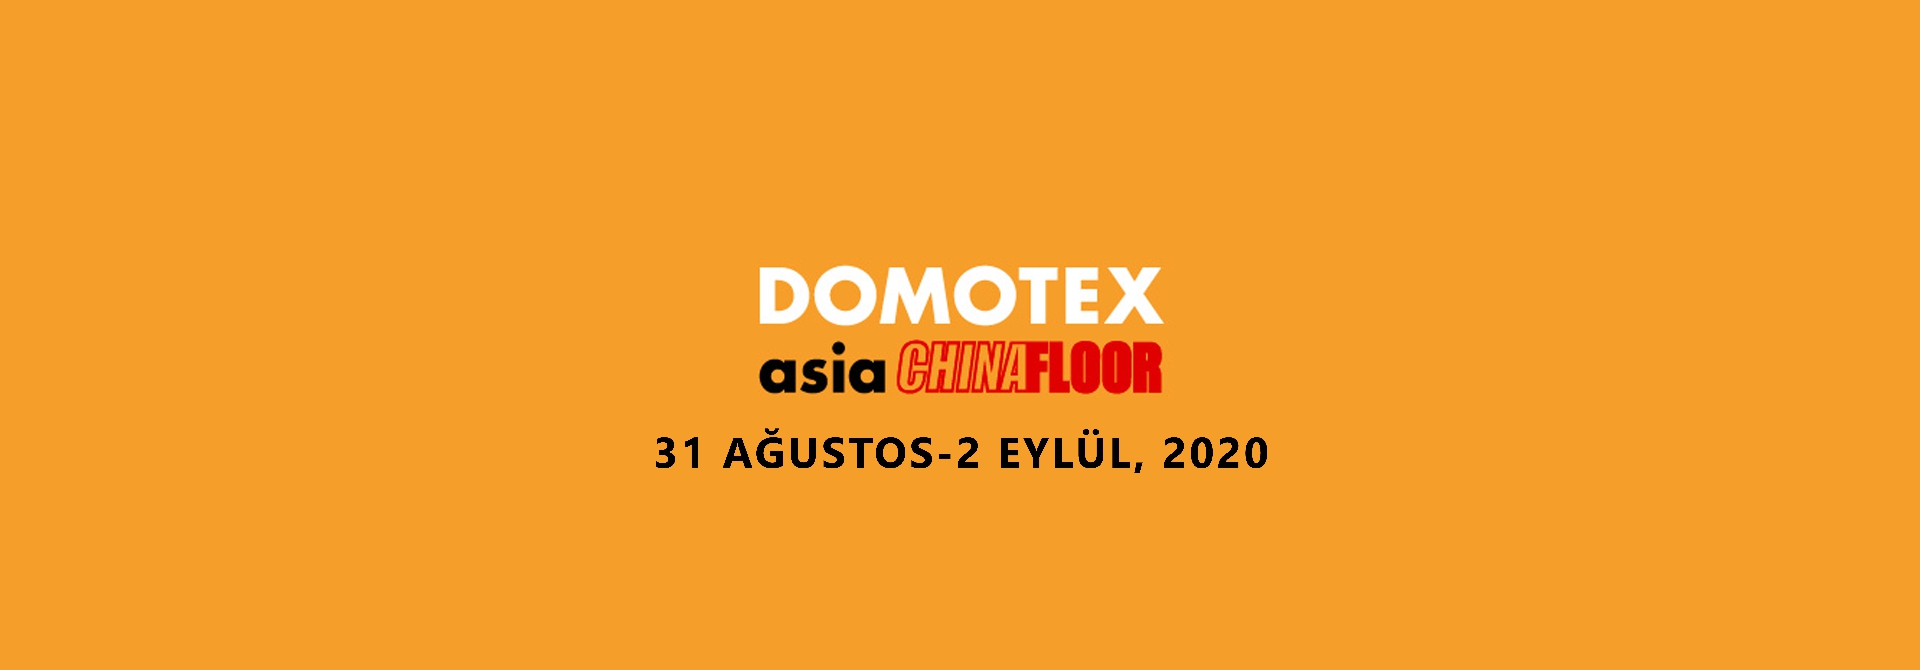 Önemli duyuru! Domotex ASIA/CHINA floor 2020 fuar tarihleri belli oldu!